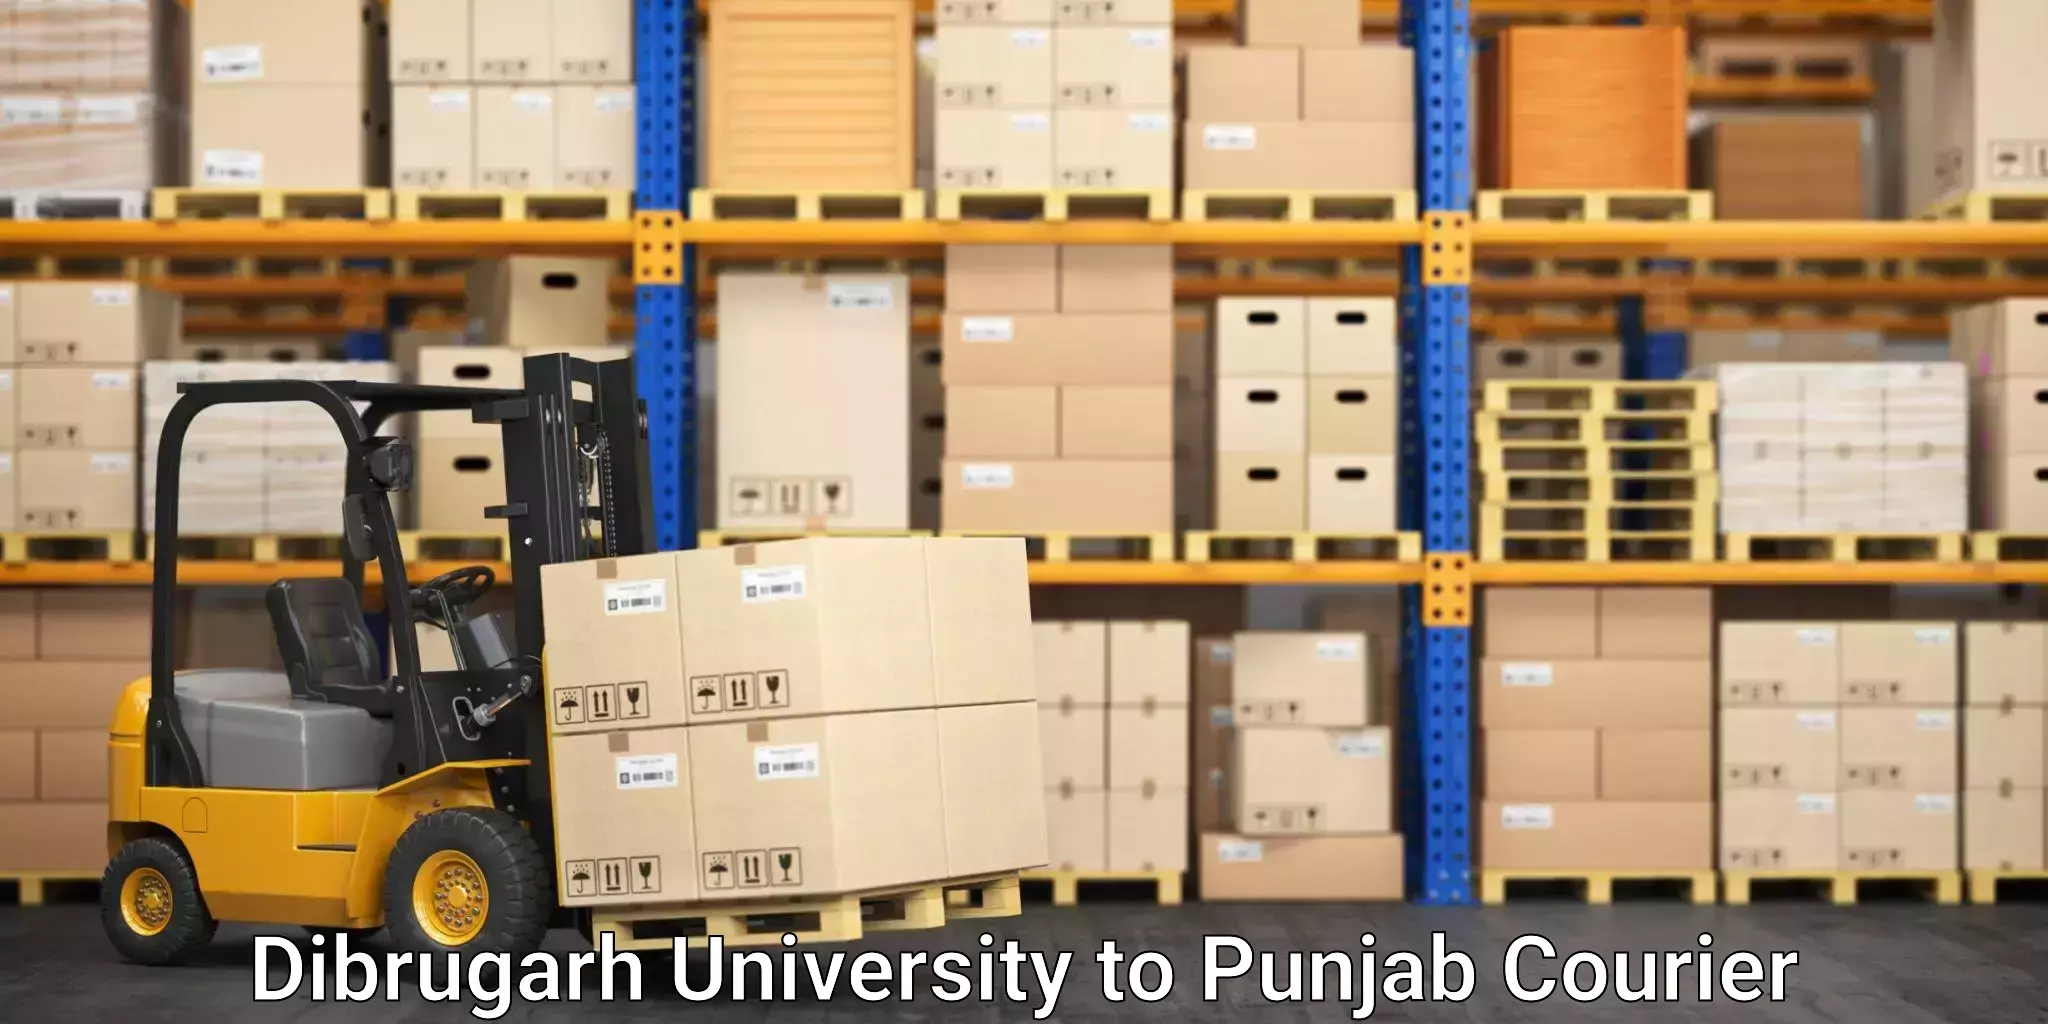 Express package services Dibrugarh University to Punjab